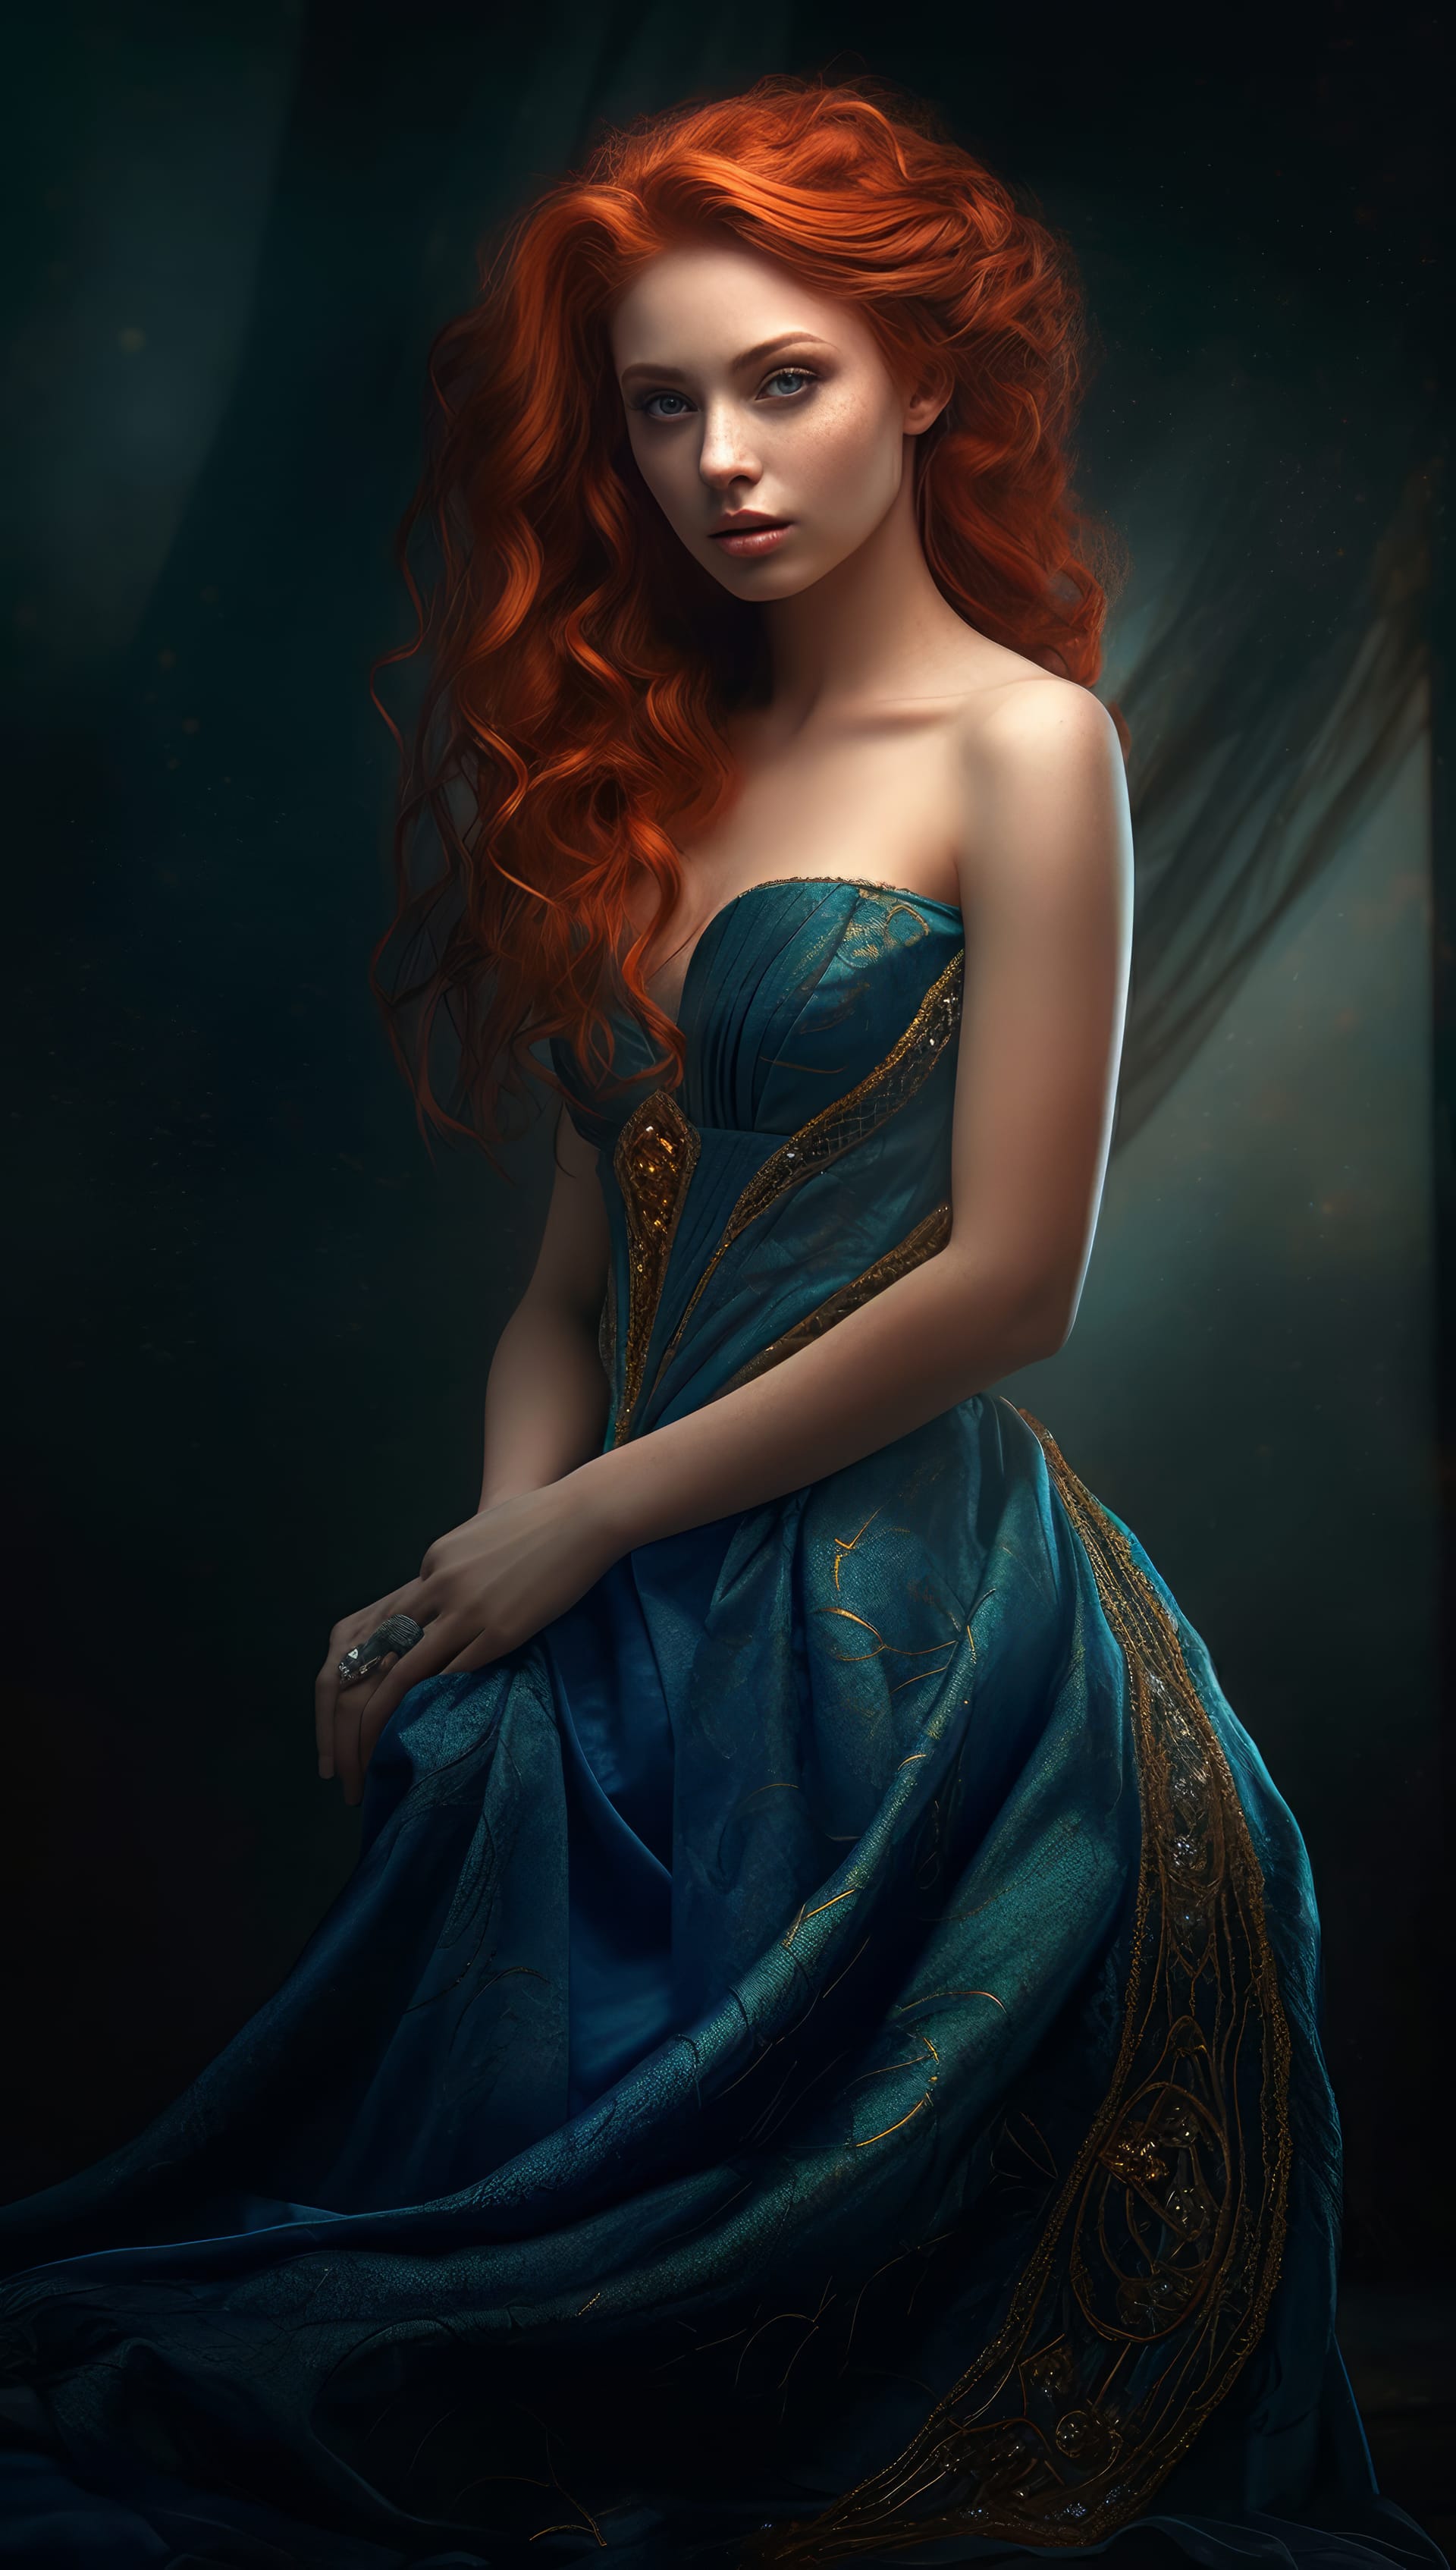 Woman with orange hair blue dress graceful image